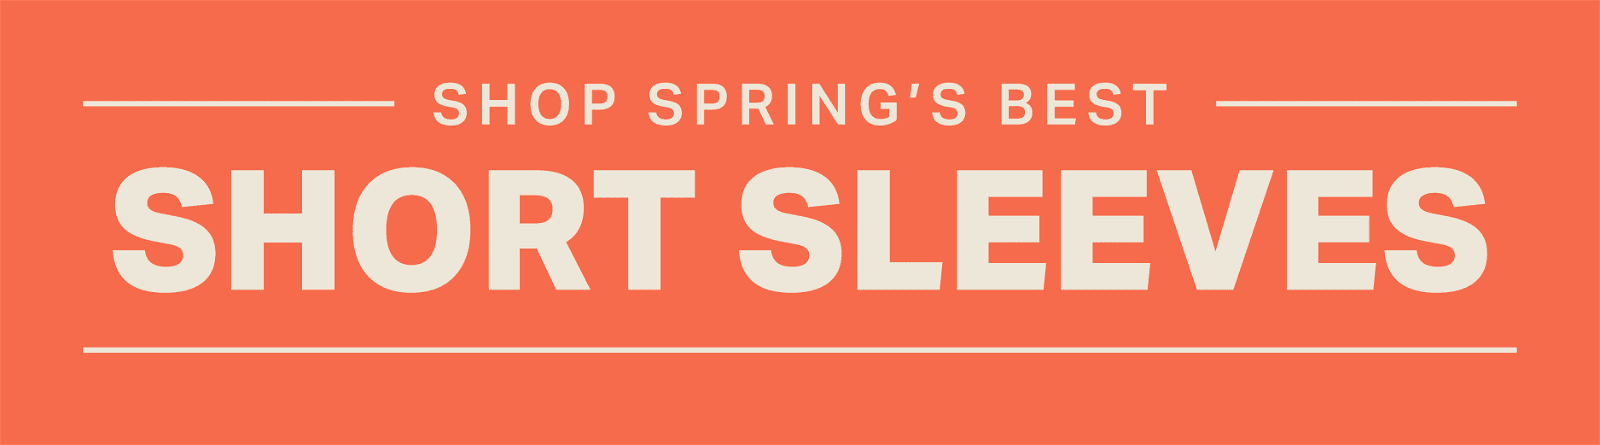 Shop Spring's Best Short Sleeves